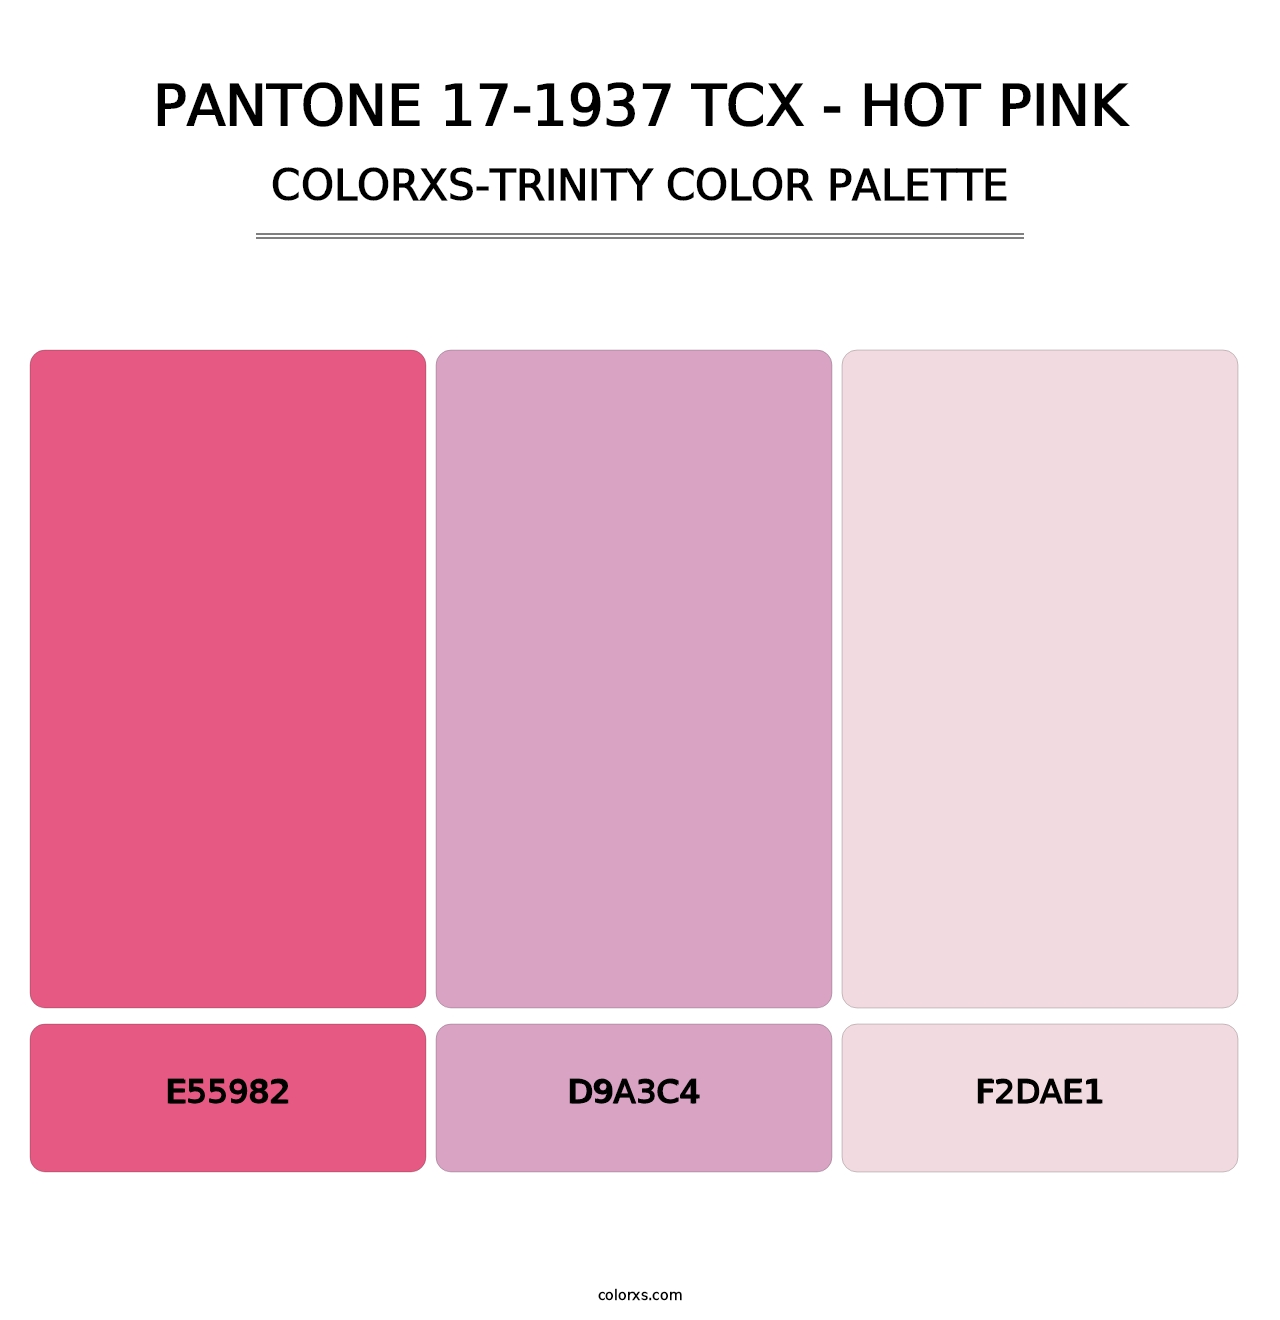 PANTONE 17-1937 TCX - Hot Pink - Colorxs Trinity Palette